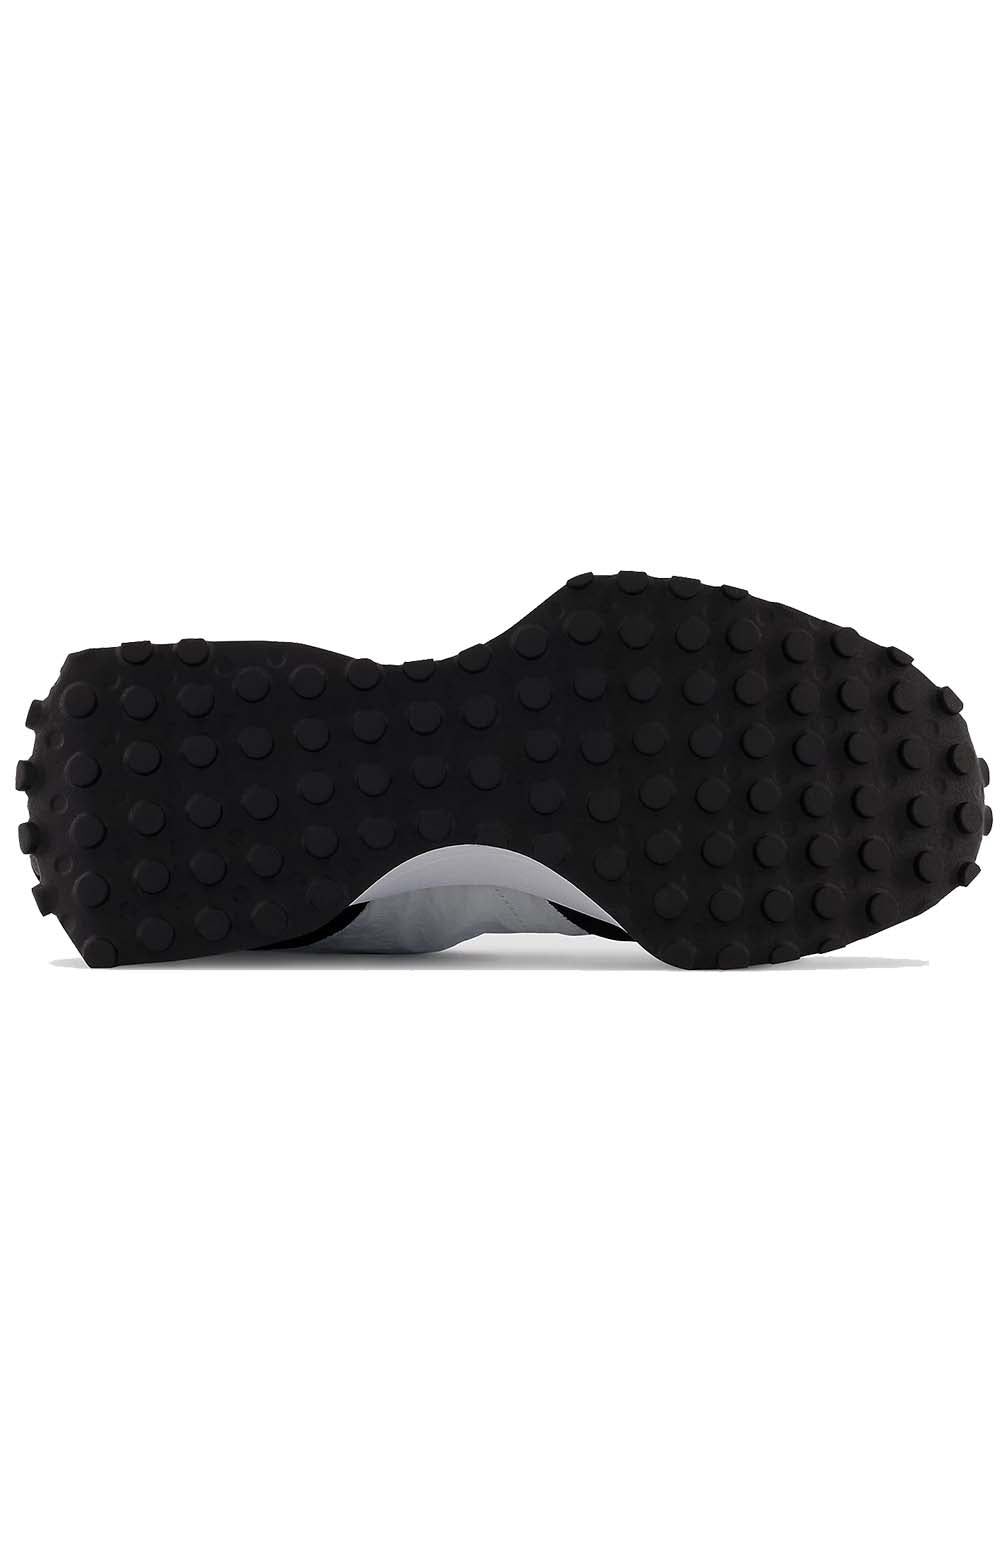 (MS327LF1) 327 Shoes - Black/Summer Fog